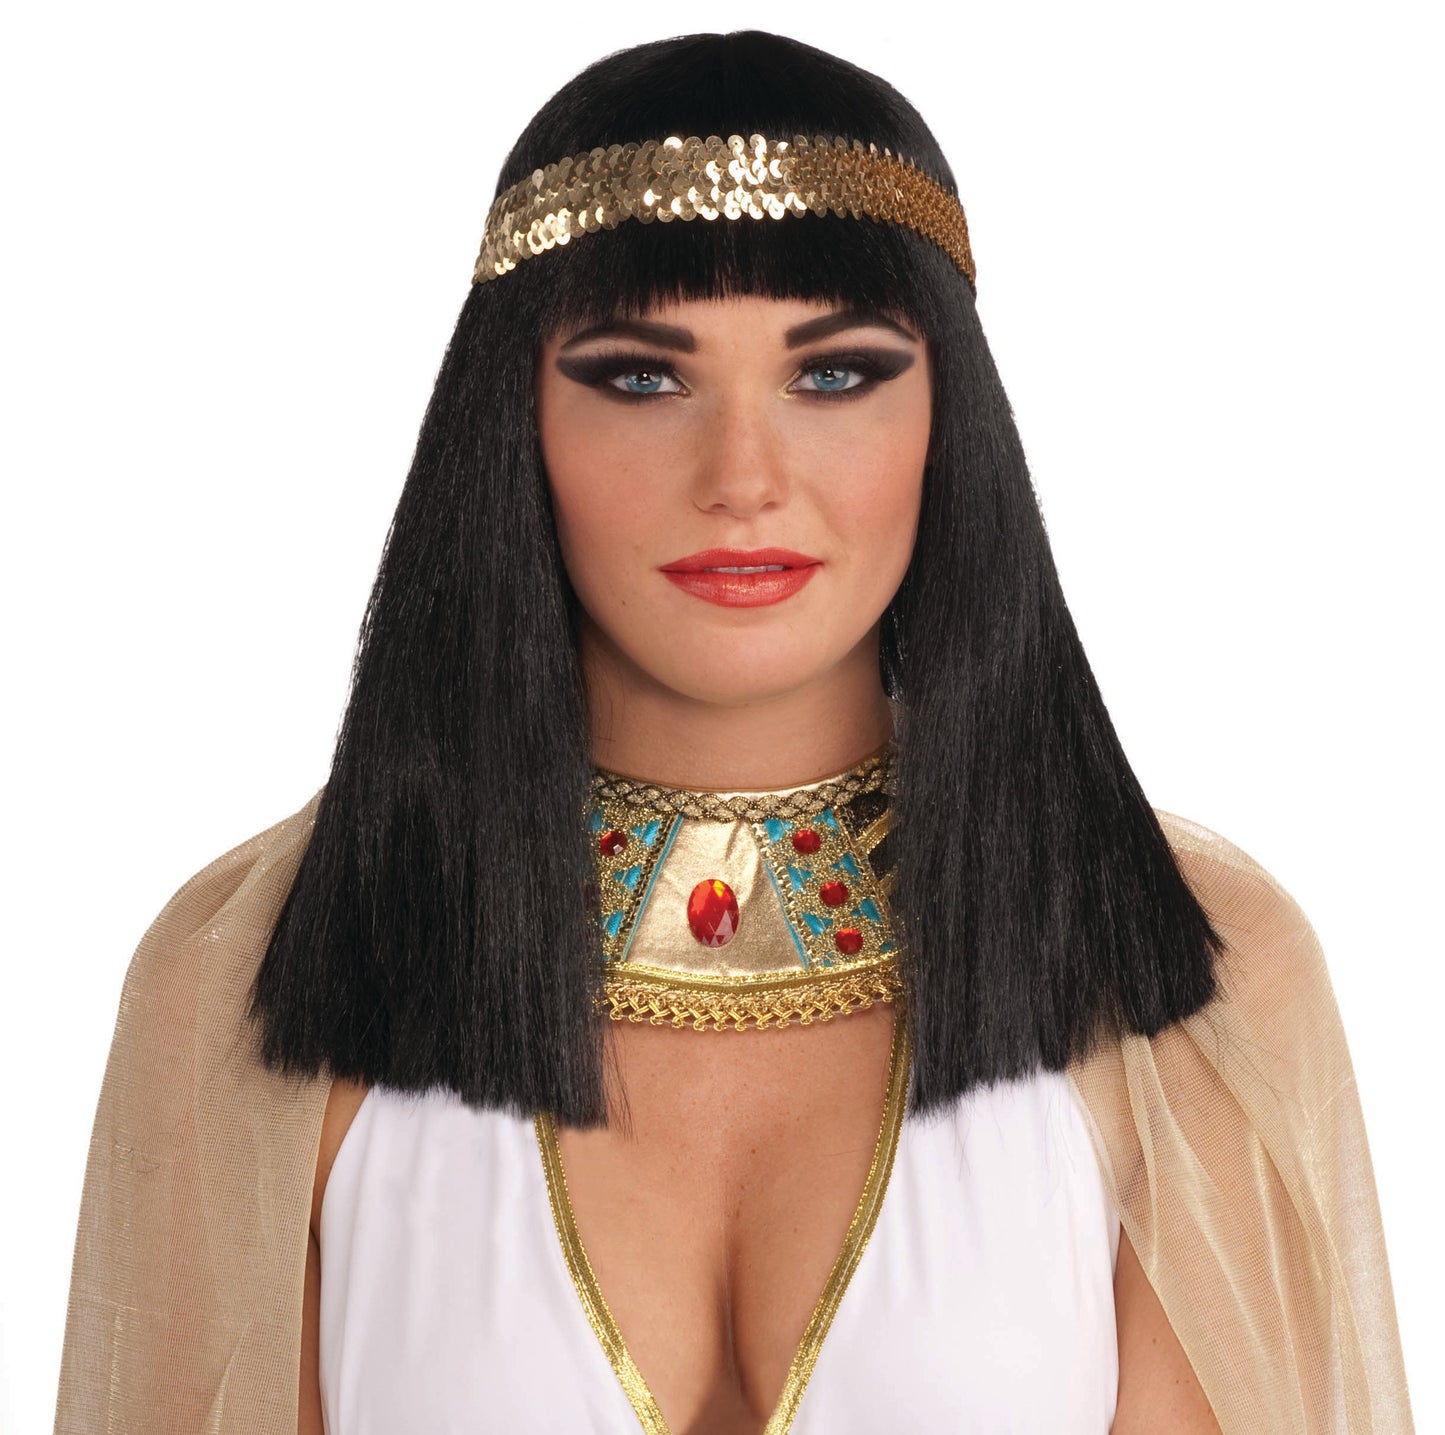 Adult Black Cleopatra Wig w/ Headband